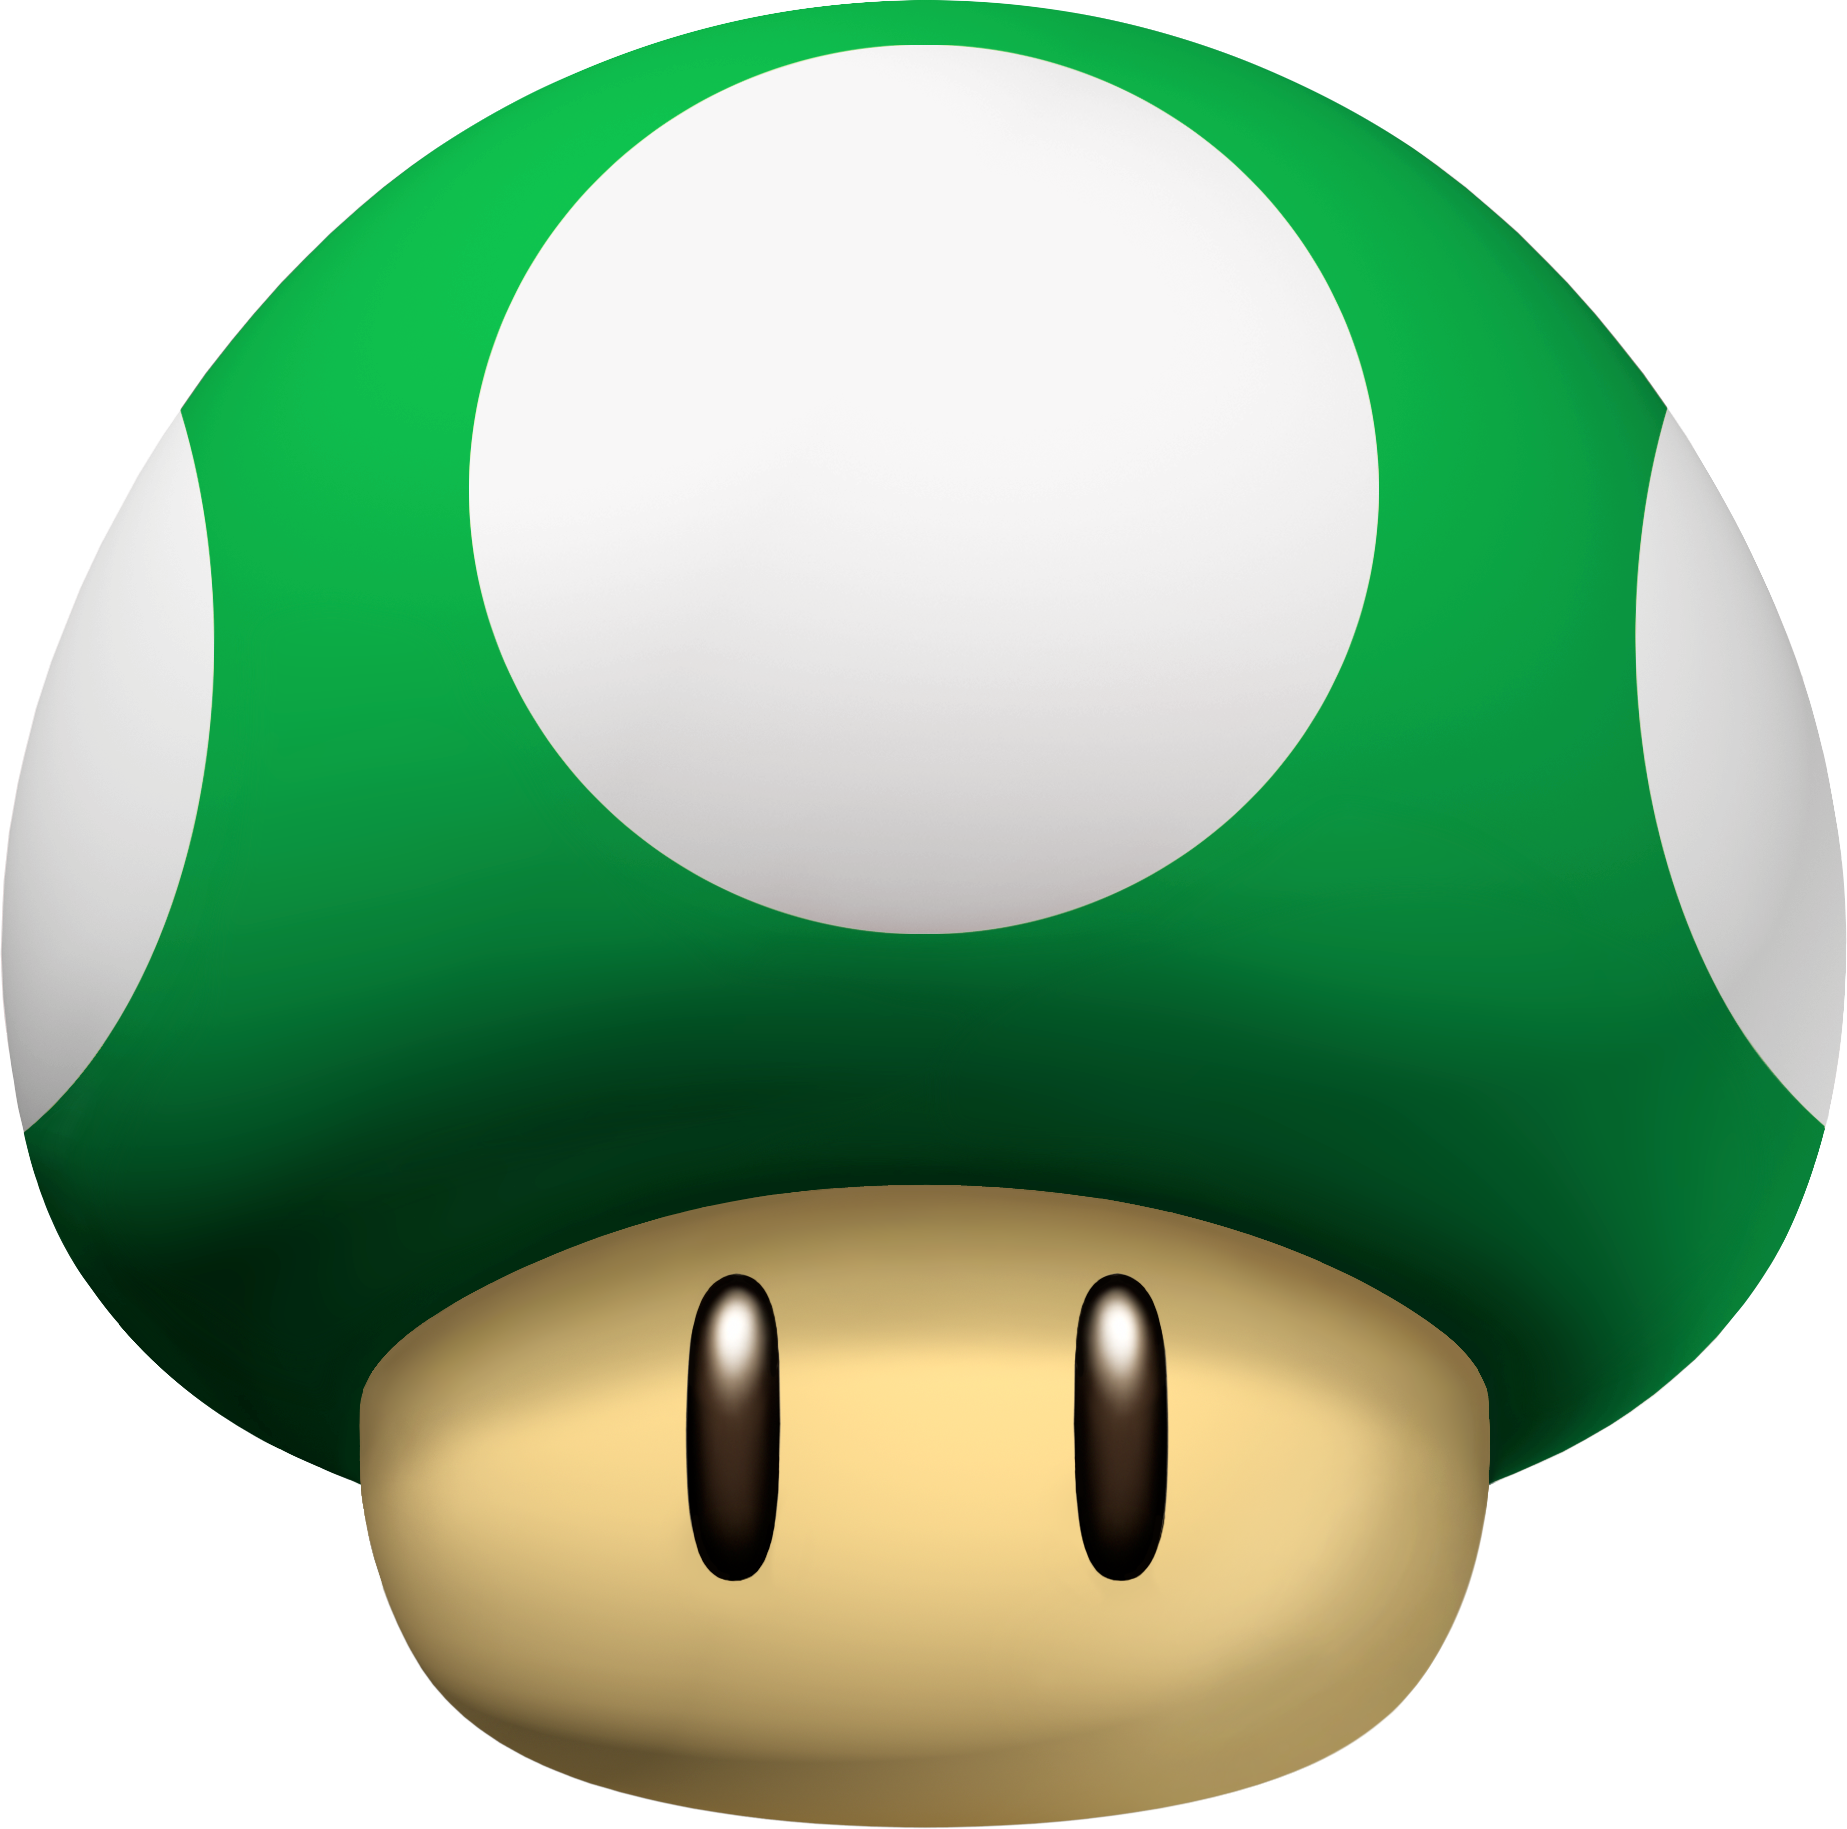 Filensmbds 1 Up Mushroom Artworkpng Super Mario Wiki The Mario Encyclopedia 4576